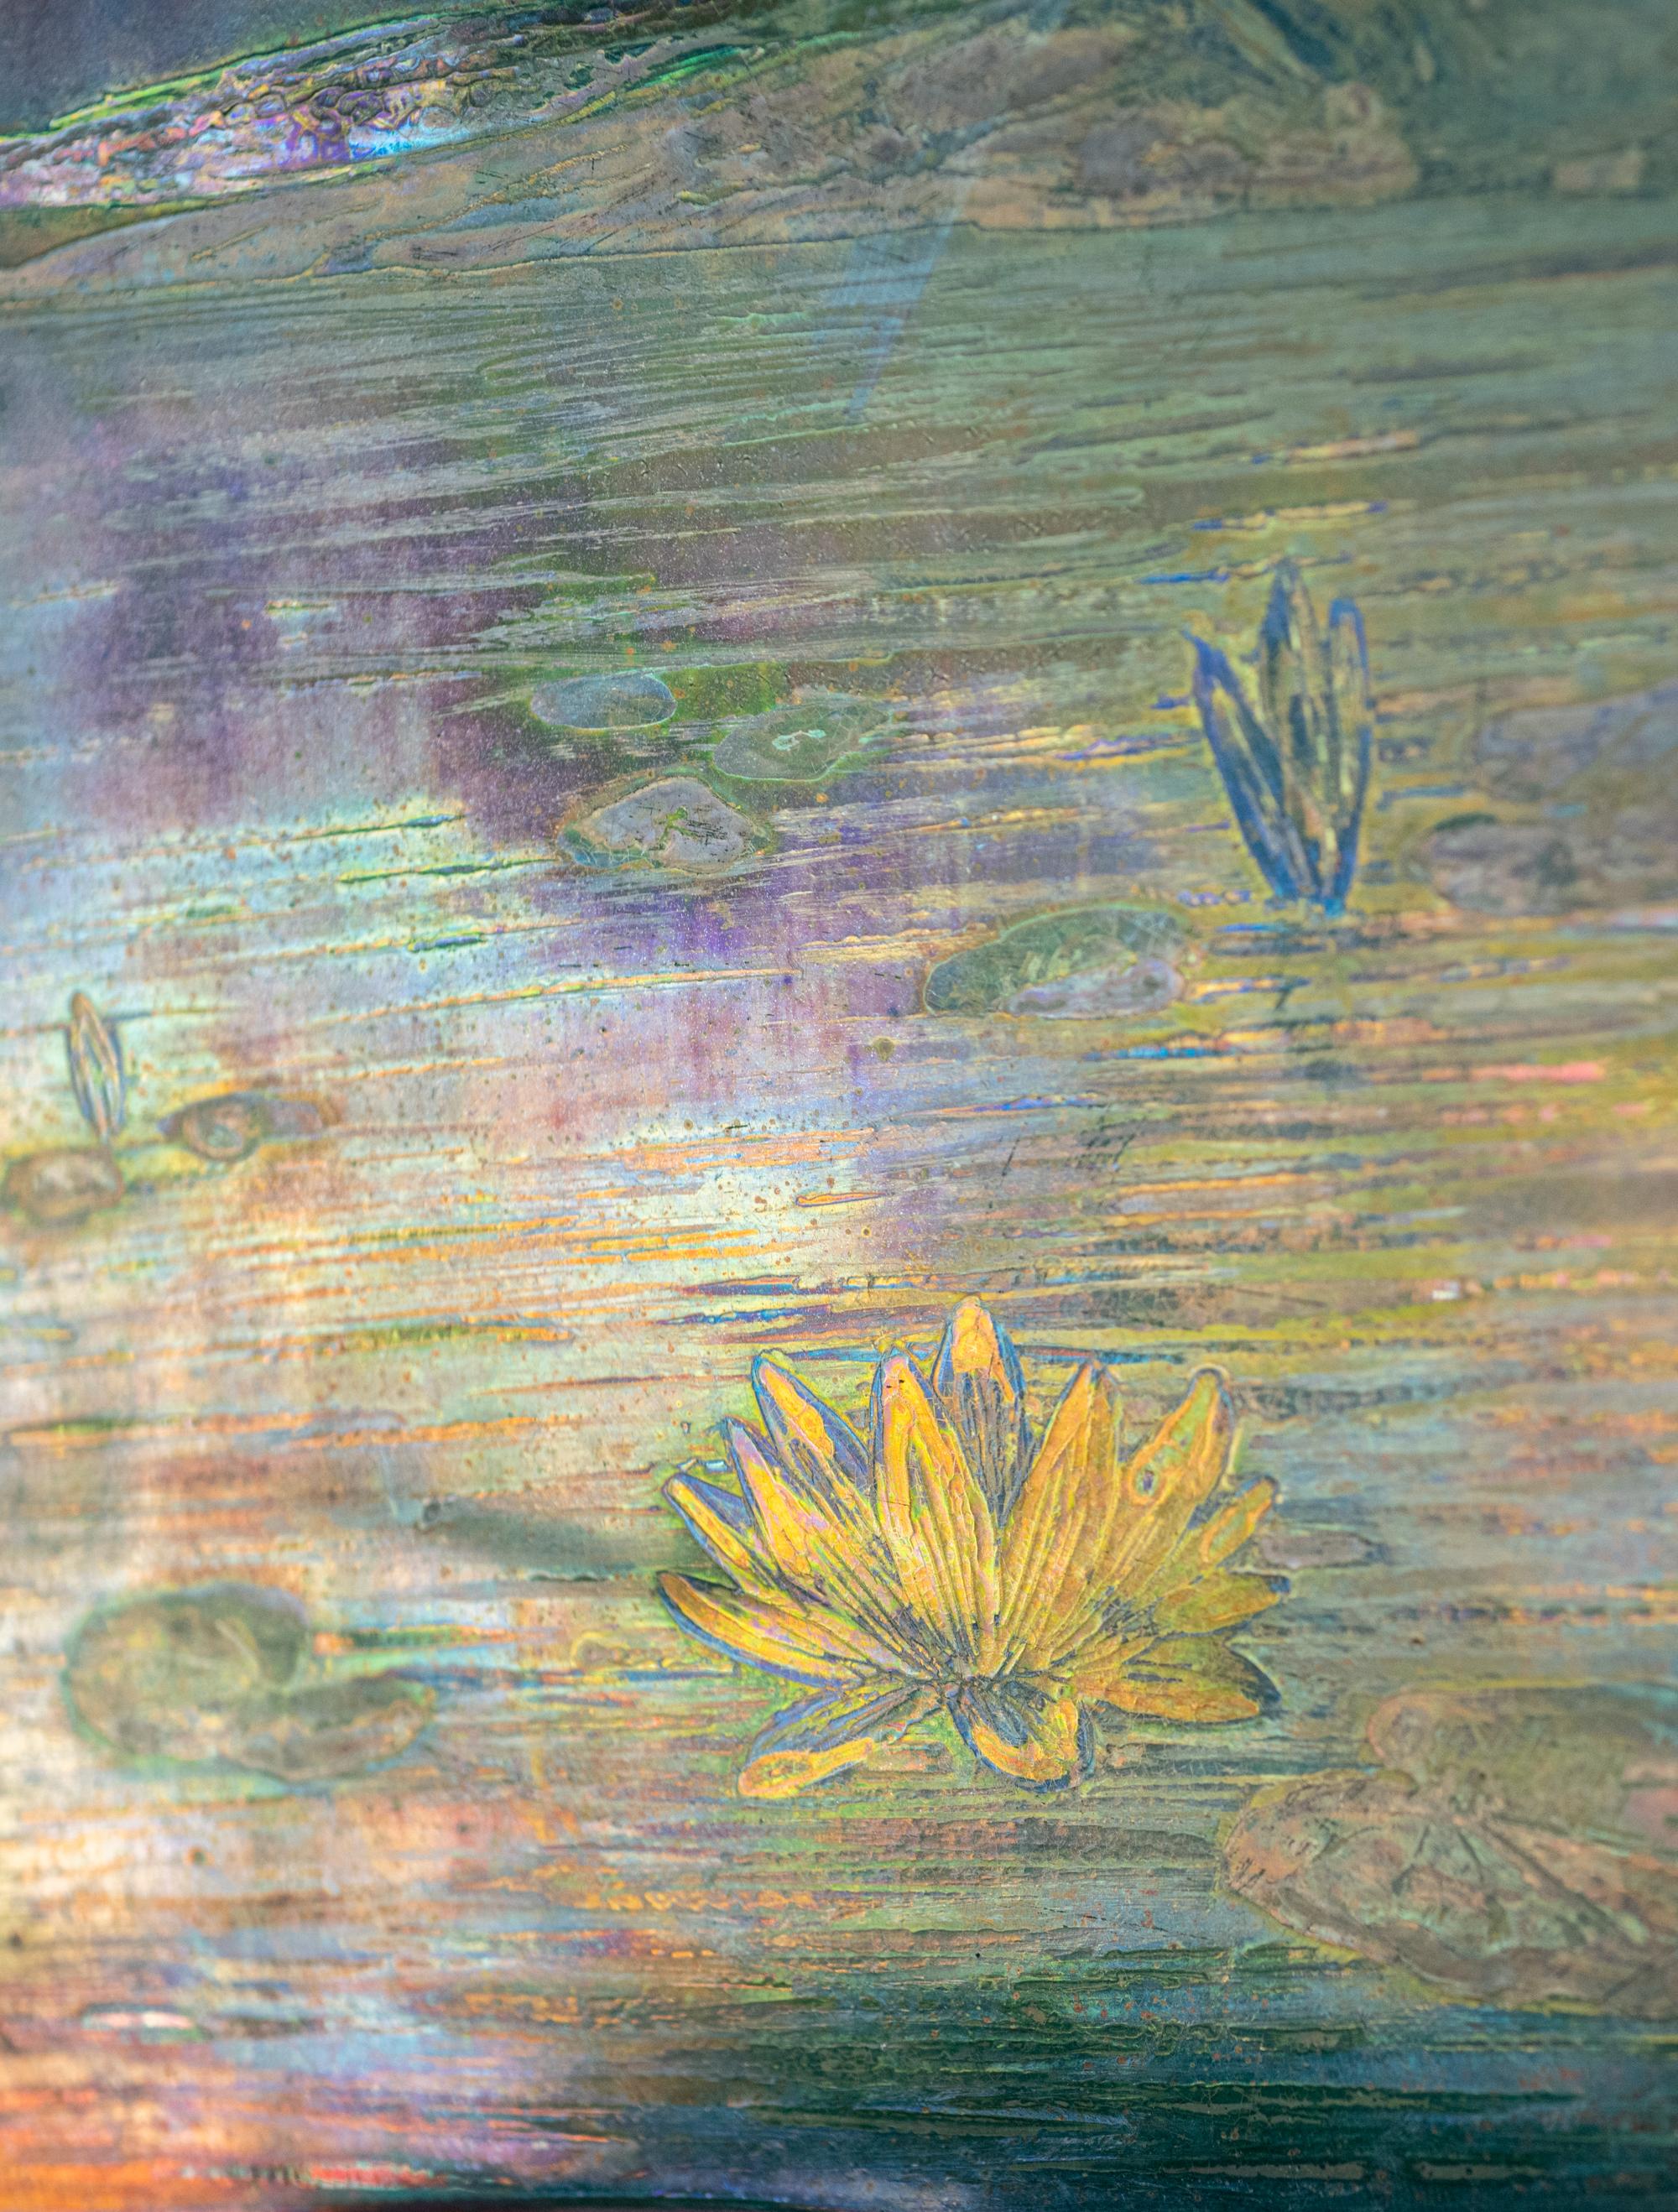 Glazed Iridescent Art Nouveau Water Lily Pond Plaque by Delphin Massier For Sale